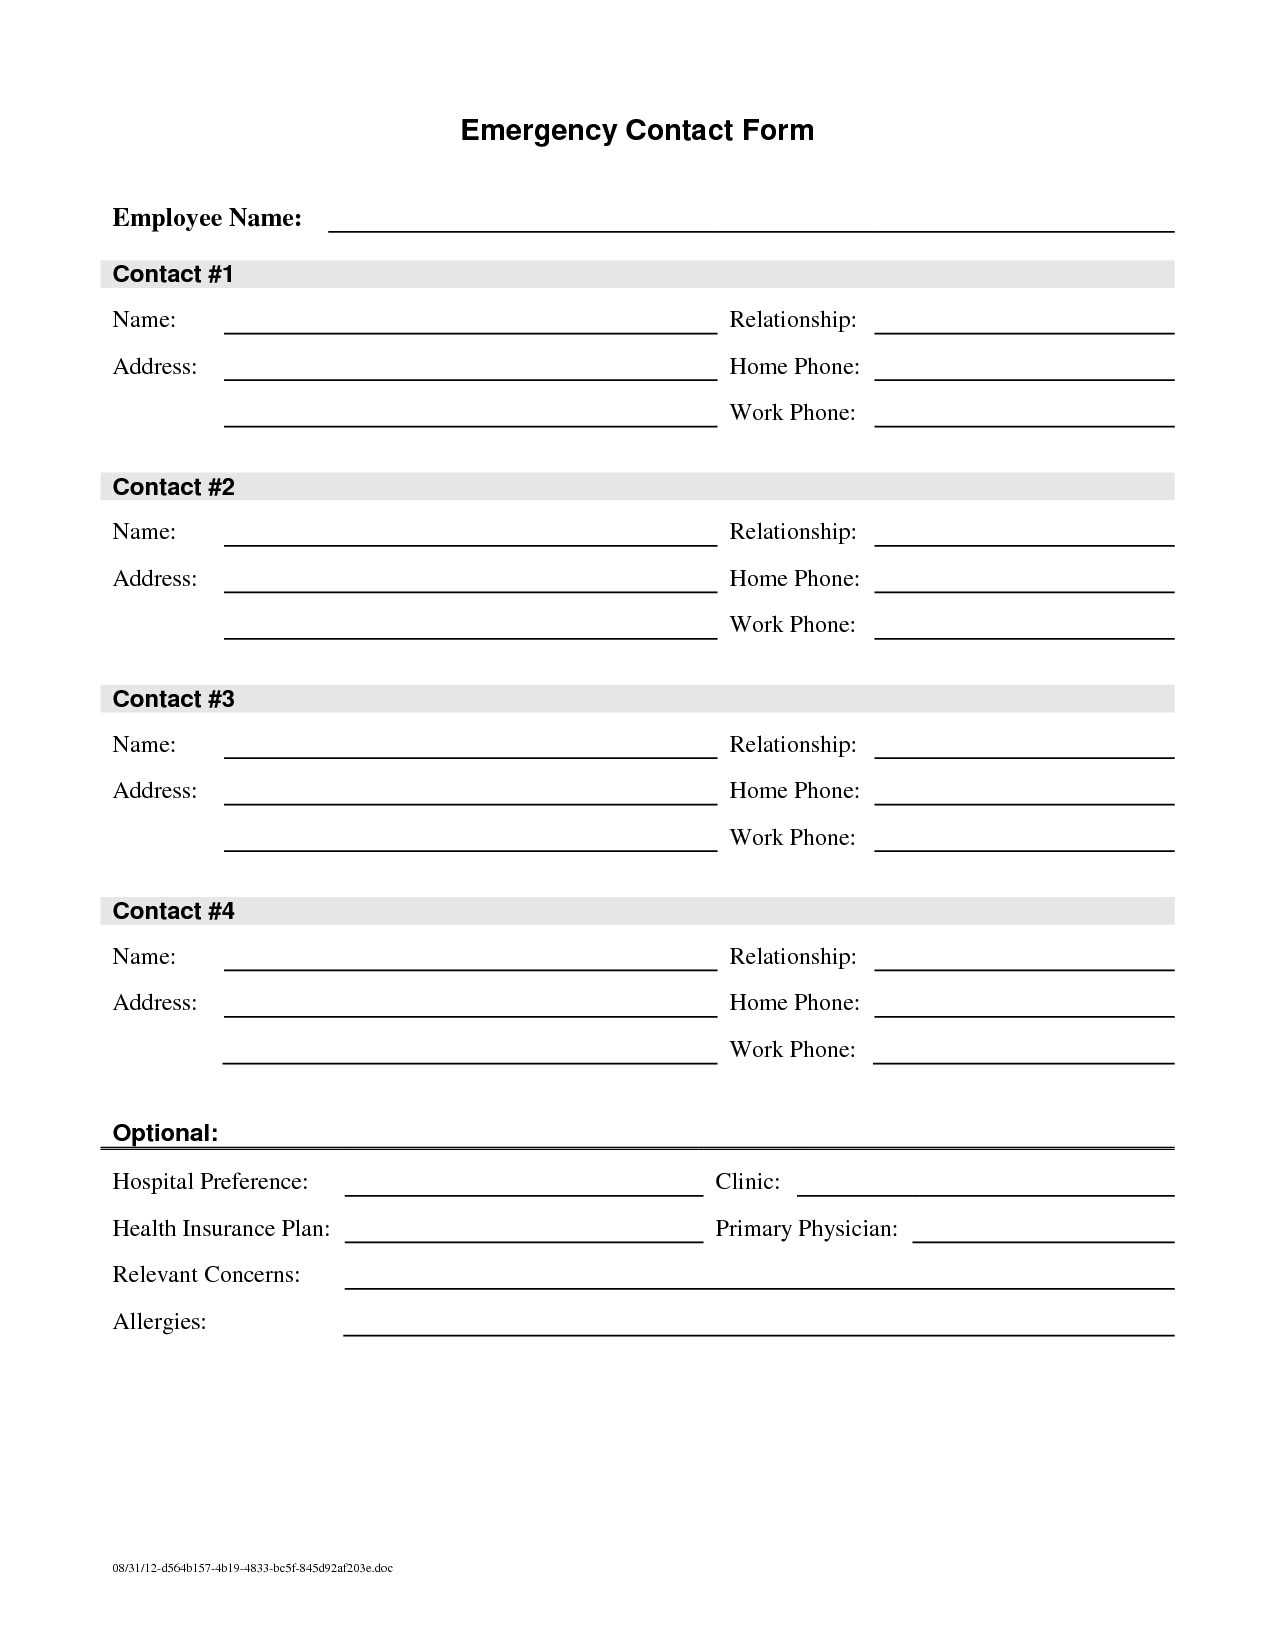 example of employee emergency contact form